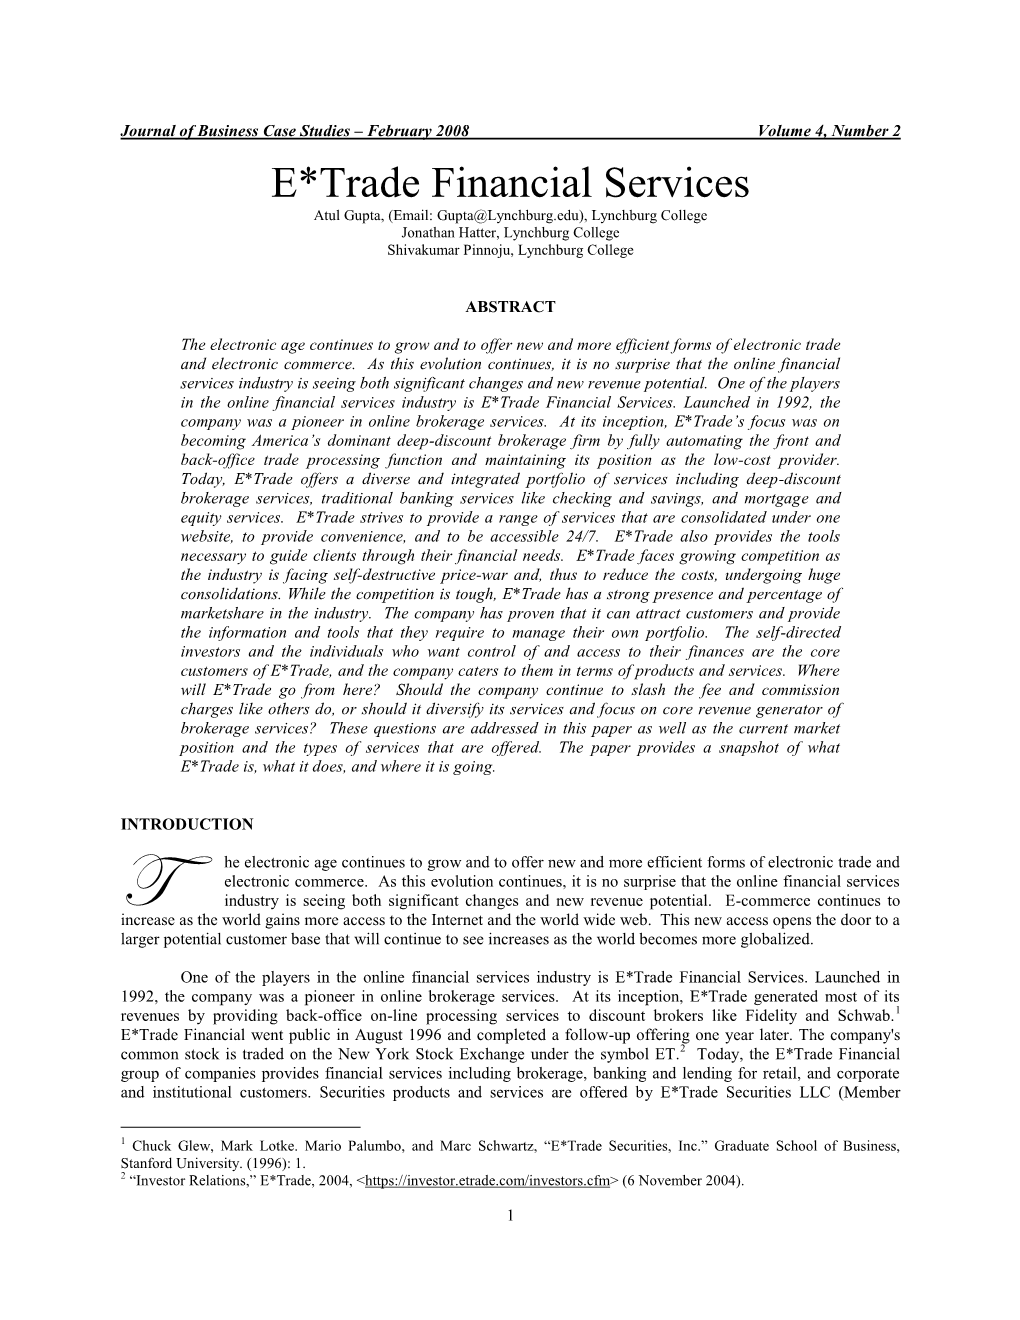 E*Trade Financial Services Atul Gupta, (Email: Gupta@Lynchburg.Edu), Lynchburg College Jonathan Hatter, Lynchburg College Shivakumar Pinnoju, Lynchburg College